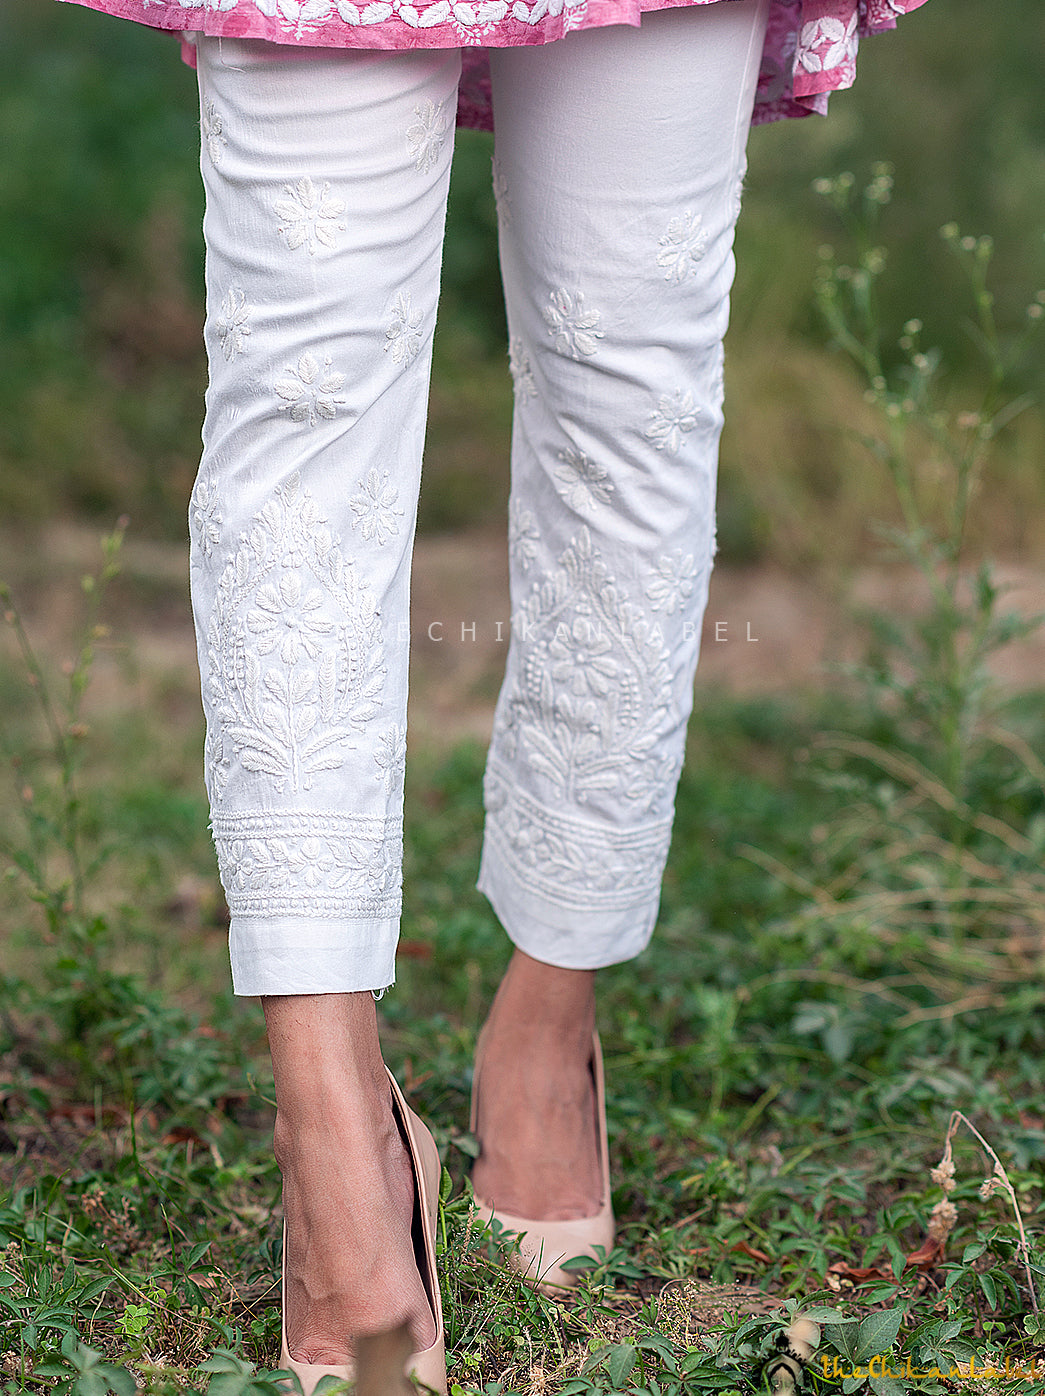 Ikat Cotton Pants for Women  Buy Women Trousers Online  CraftsandLooms   CraftsandLoomscom